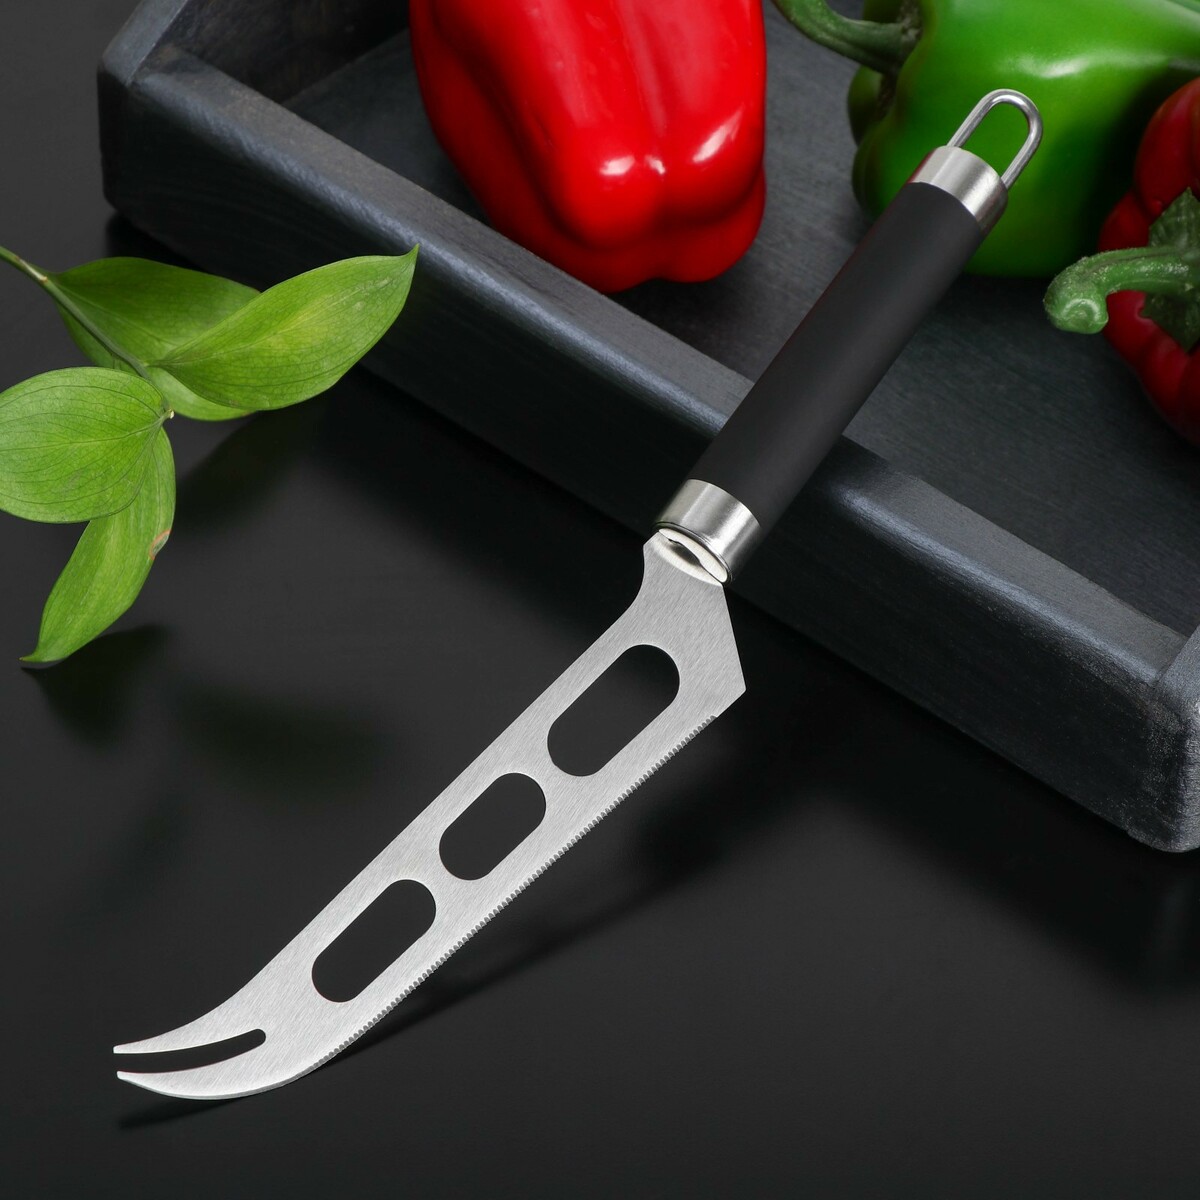 Нож для сыра доляна venus, нержавеющая сталь, цвет черный нож для сыра доляна fargo 26×3×2 см нержавеющая сталь серебряный